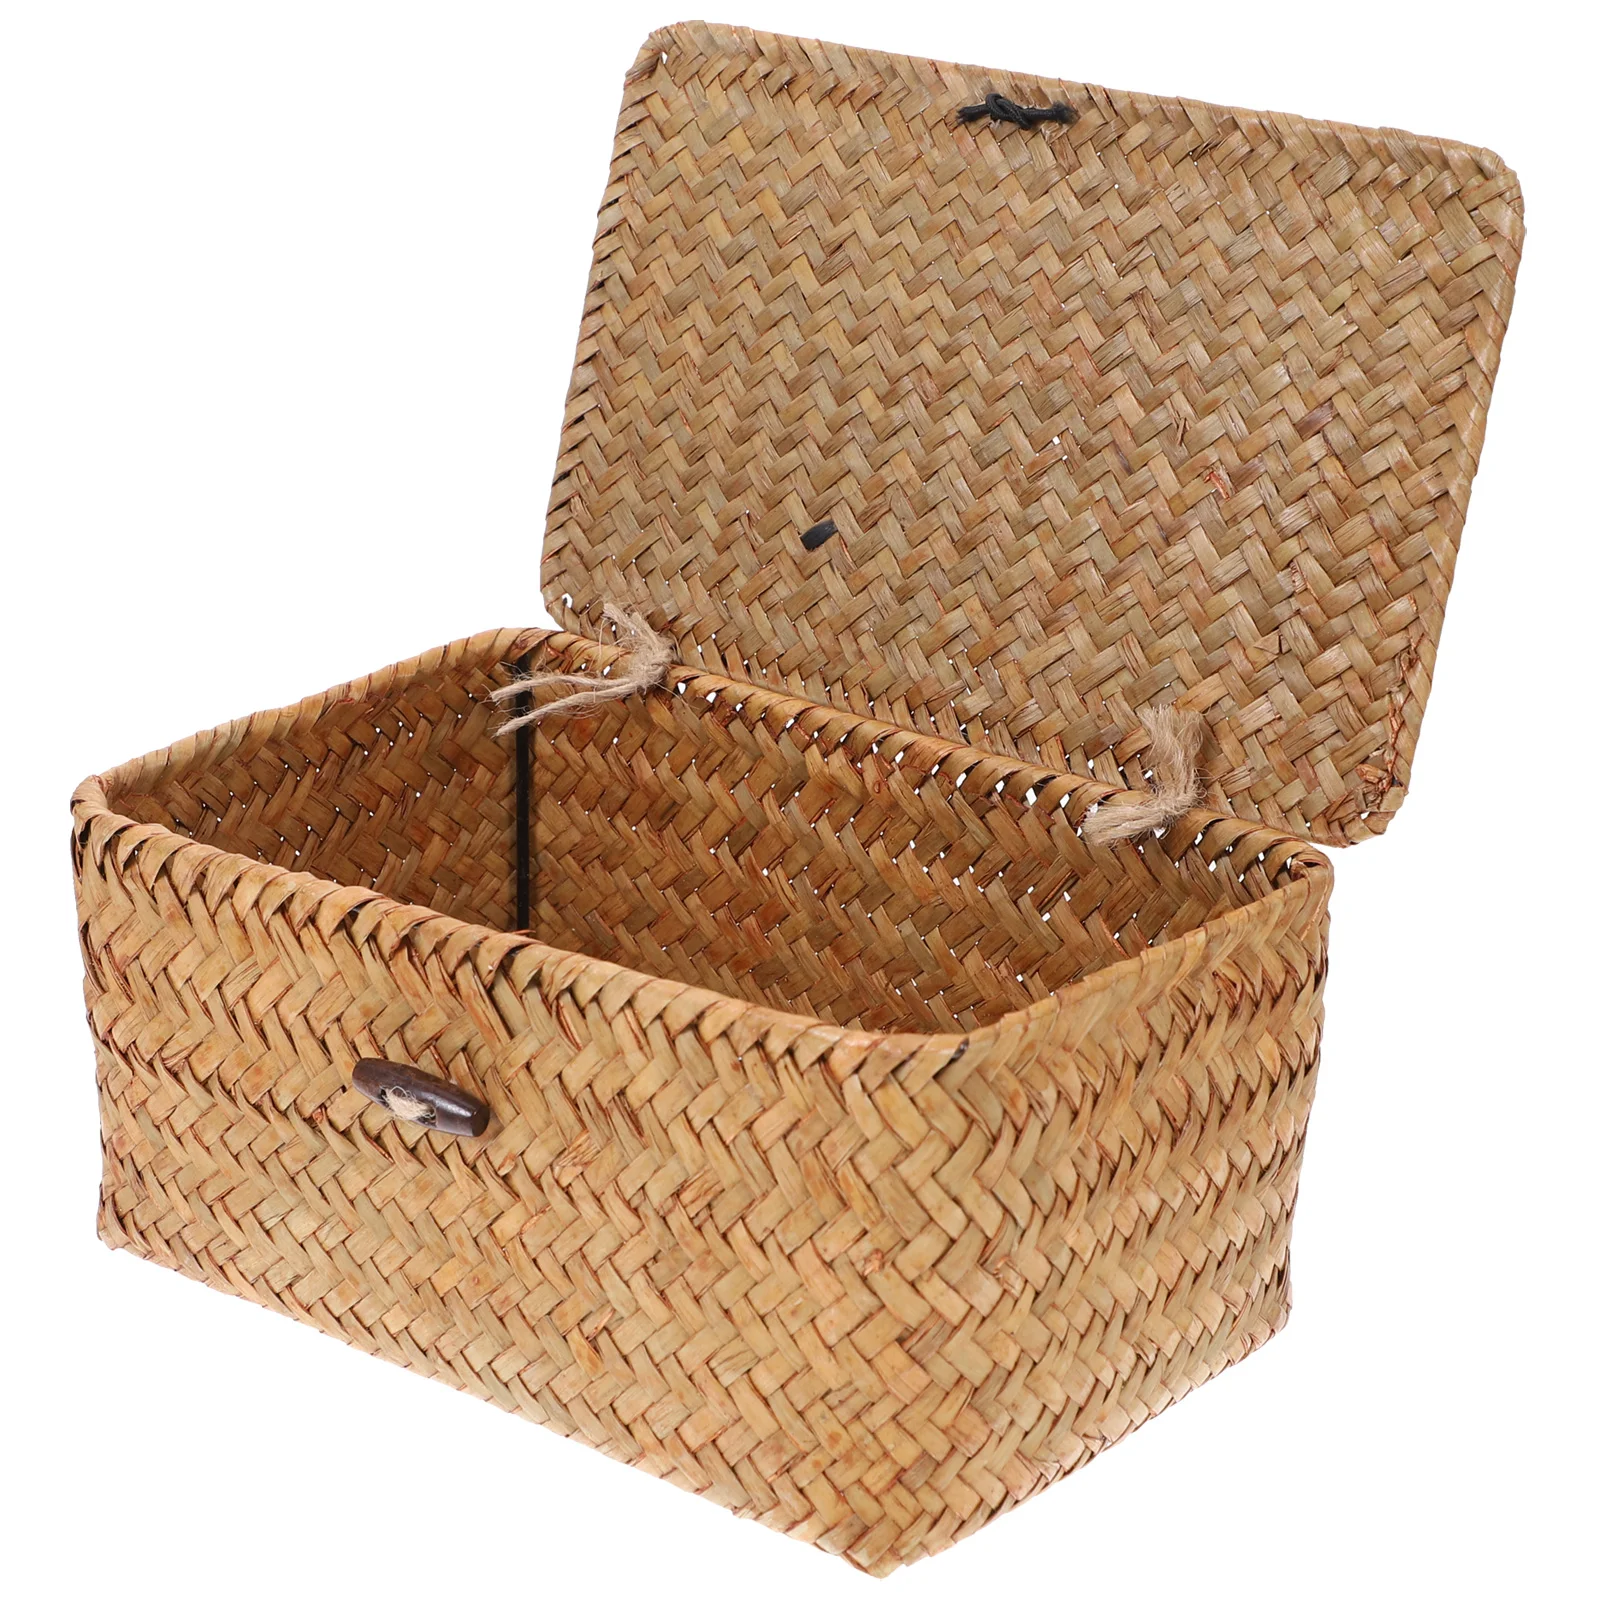 

Basket Storage Wicker Baskets Woven Organizer Rattan Seagrass Lid Box Bins Desktop Organizing Shelf Hyacinth Lids Sundries